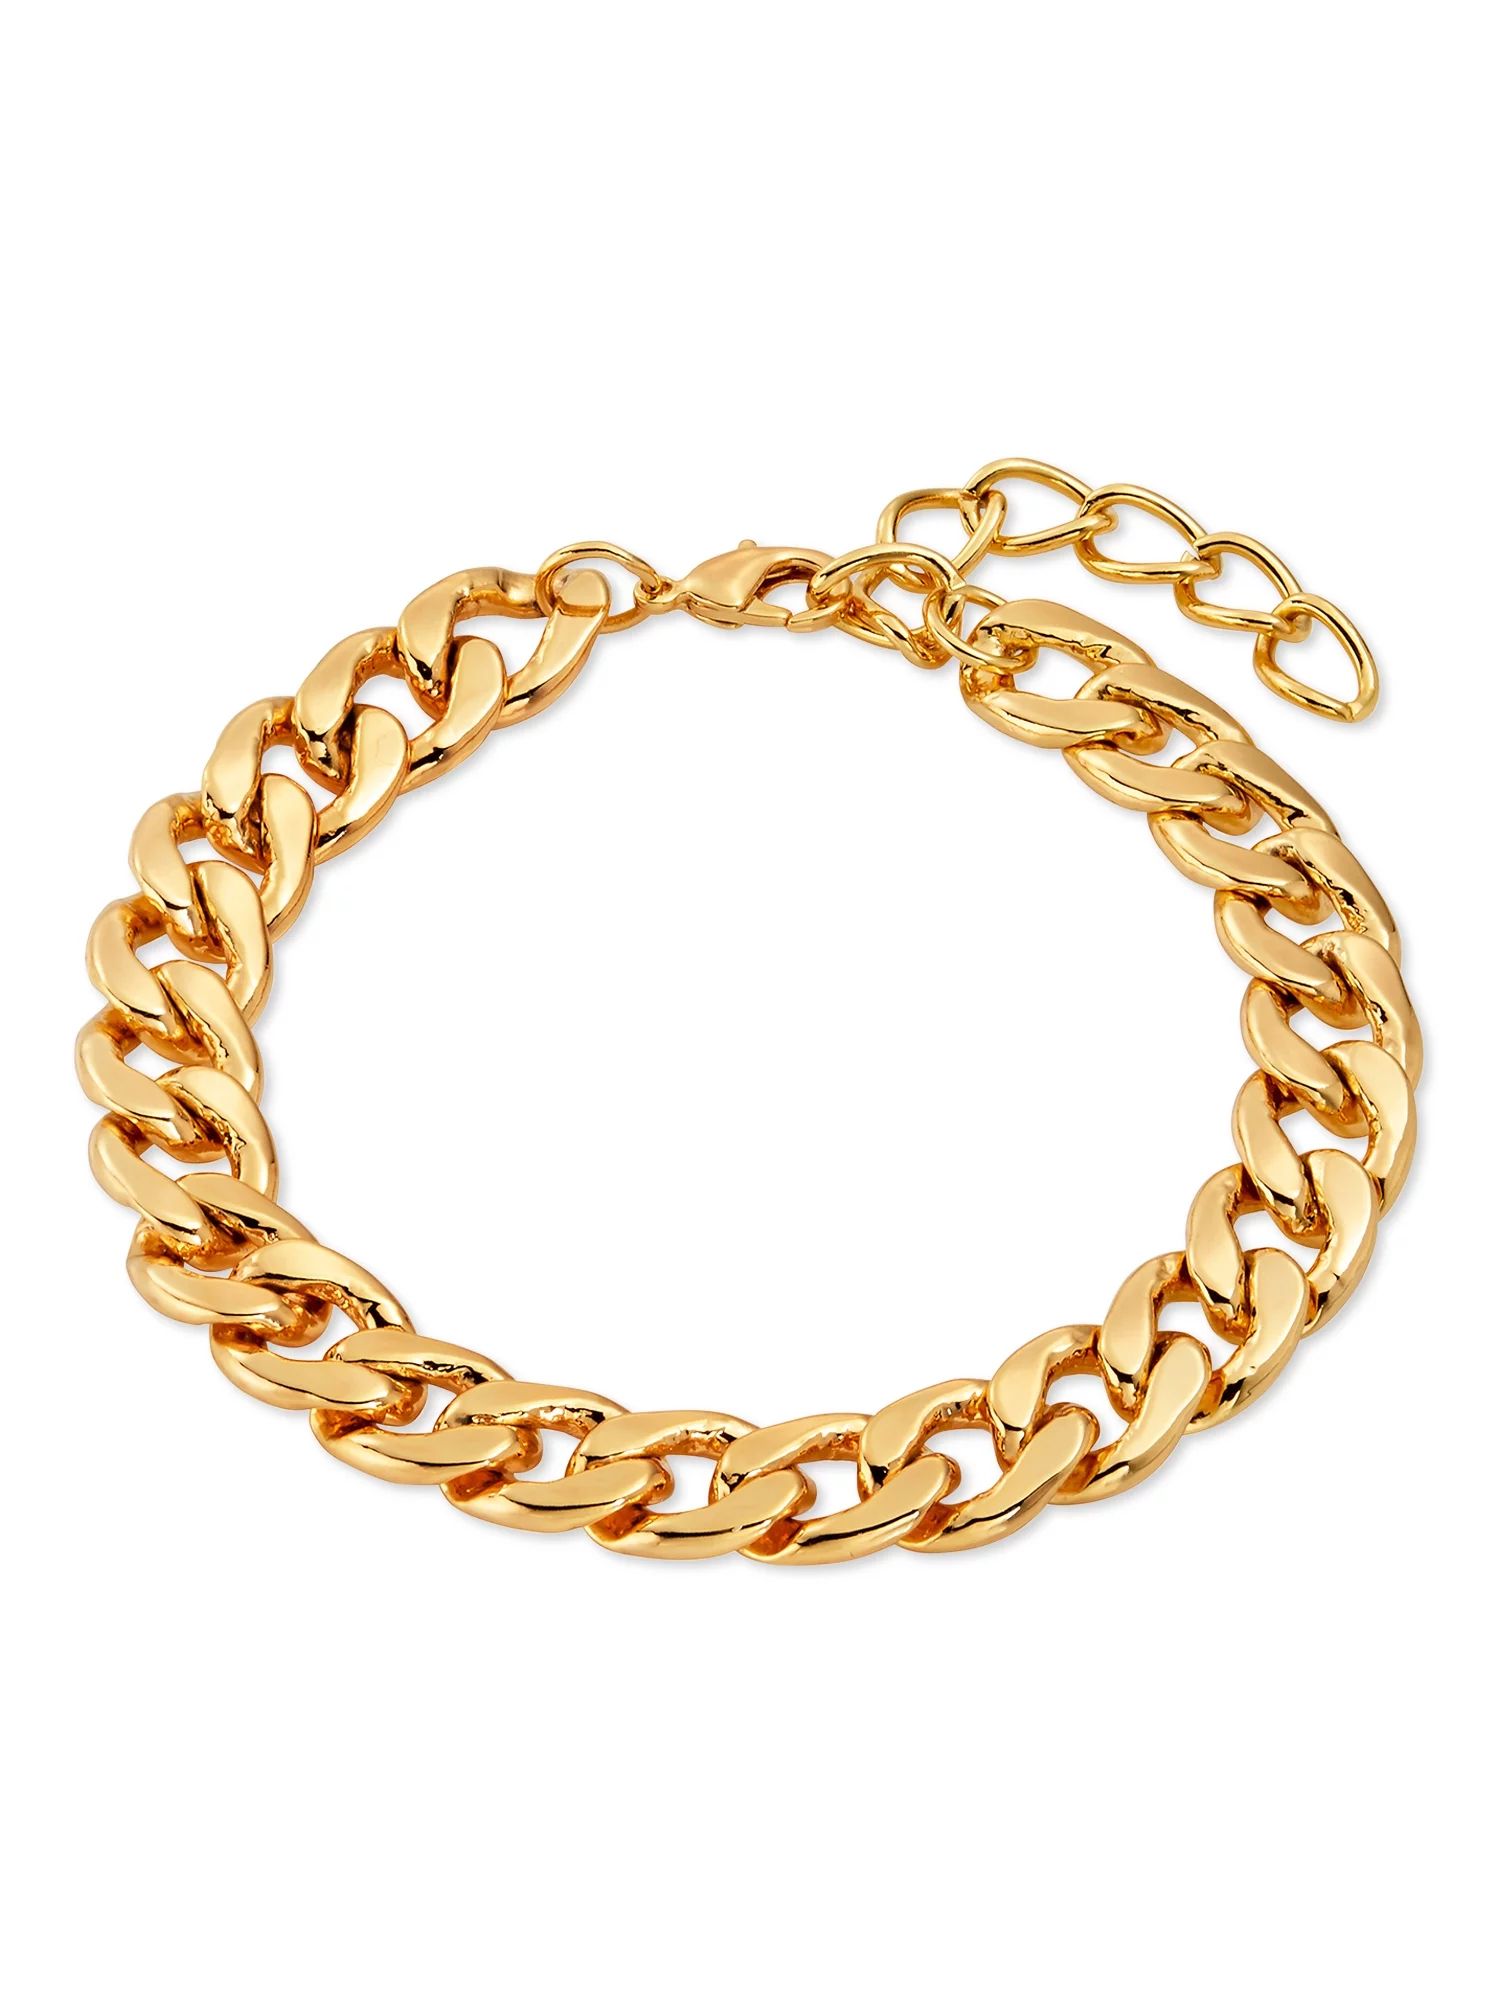 Scoop Womens Brass Yellow Gold-Plated Curb Chain Bracelet, 7.75 + 2" Extender | Walmart (US)